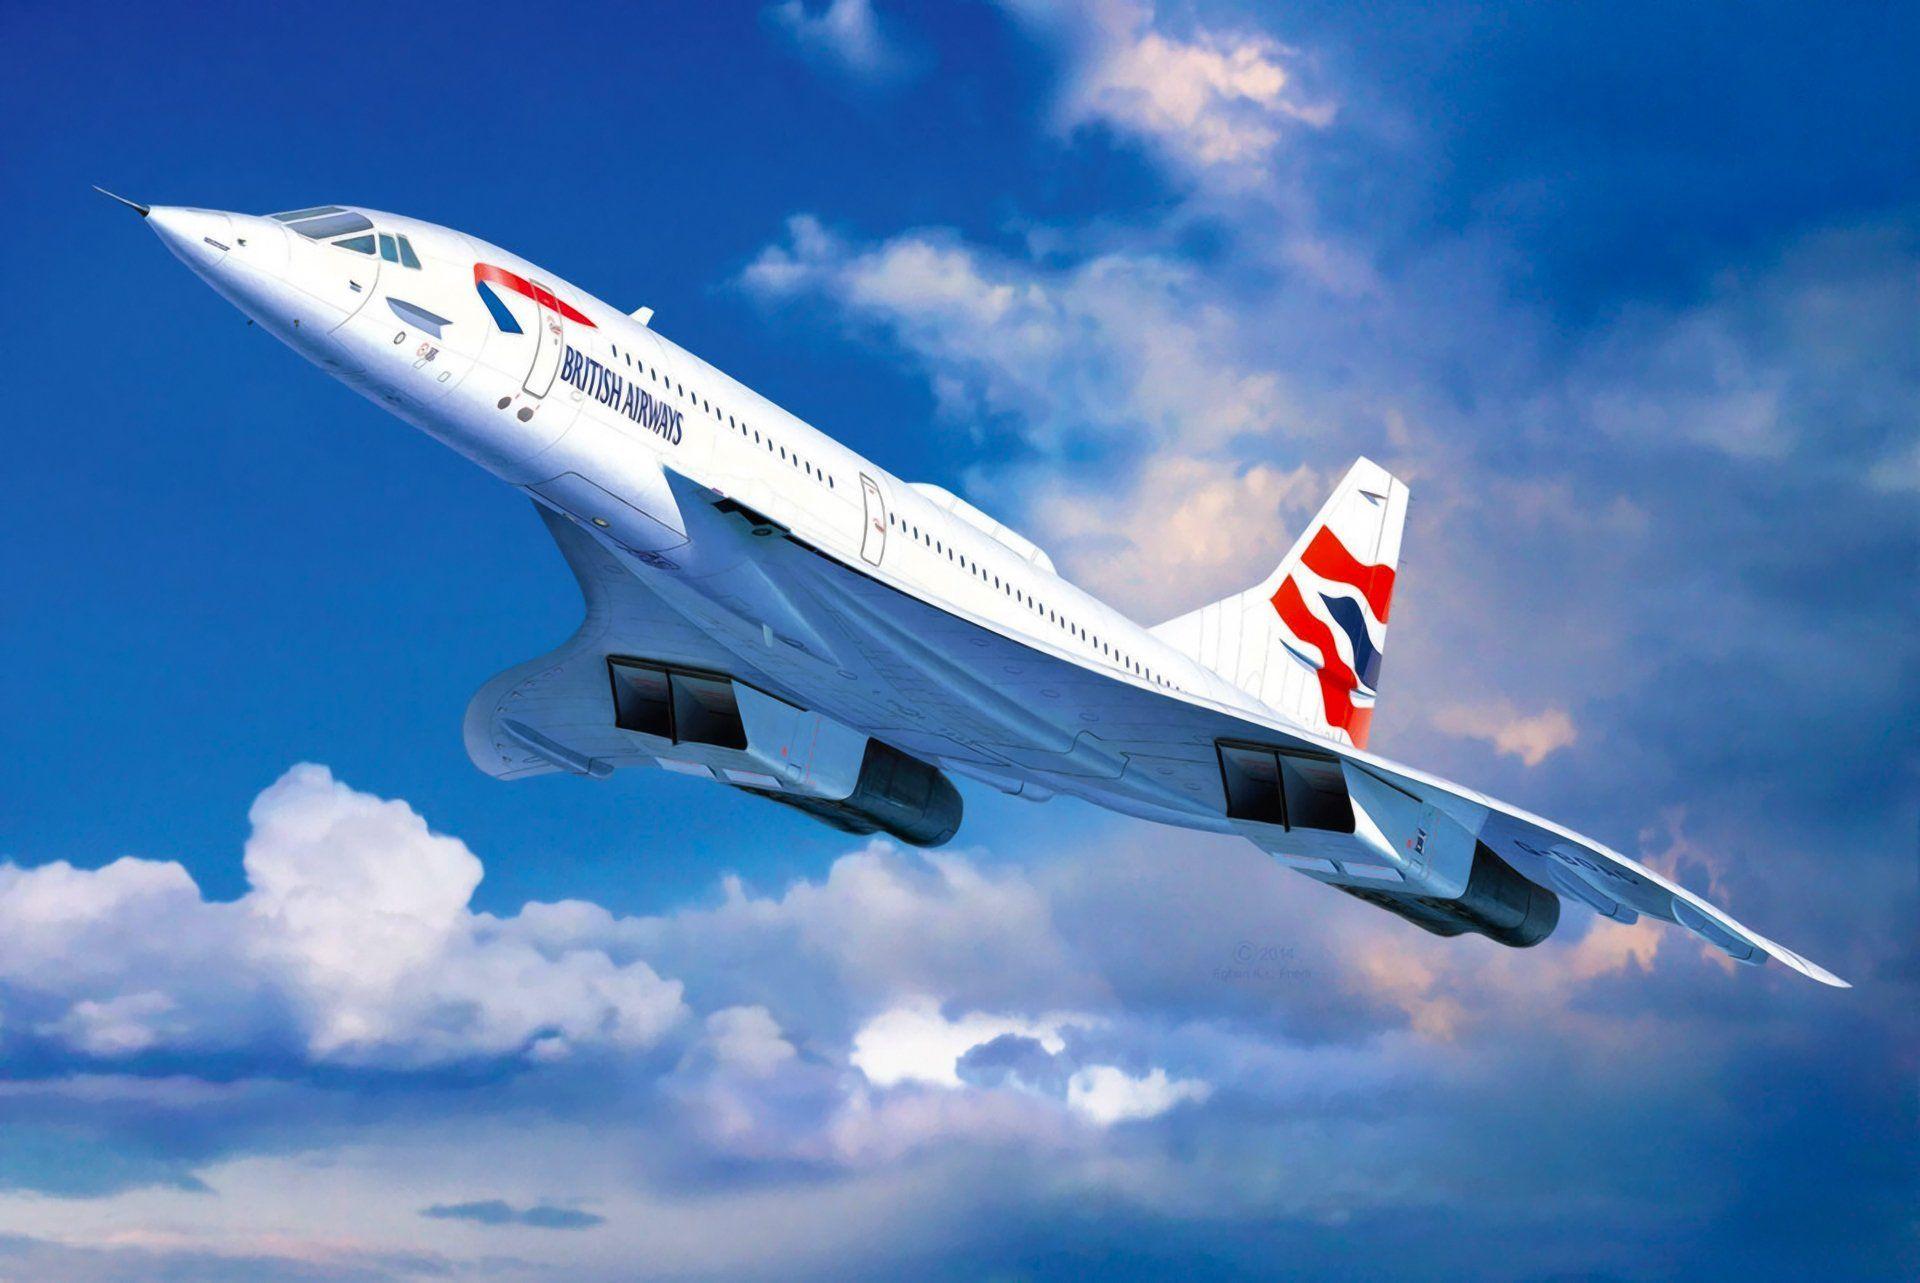 Concorde: British Airways. Concorde: The Supersonic